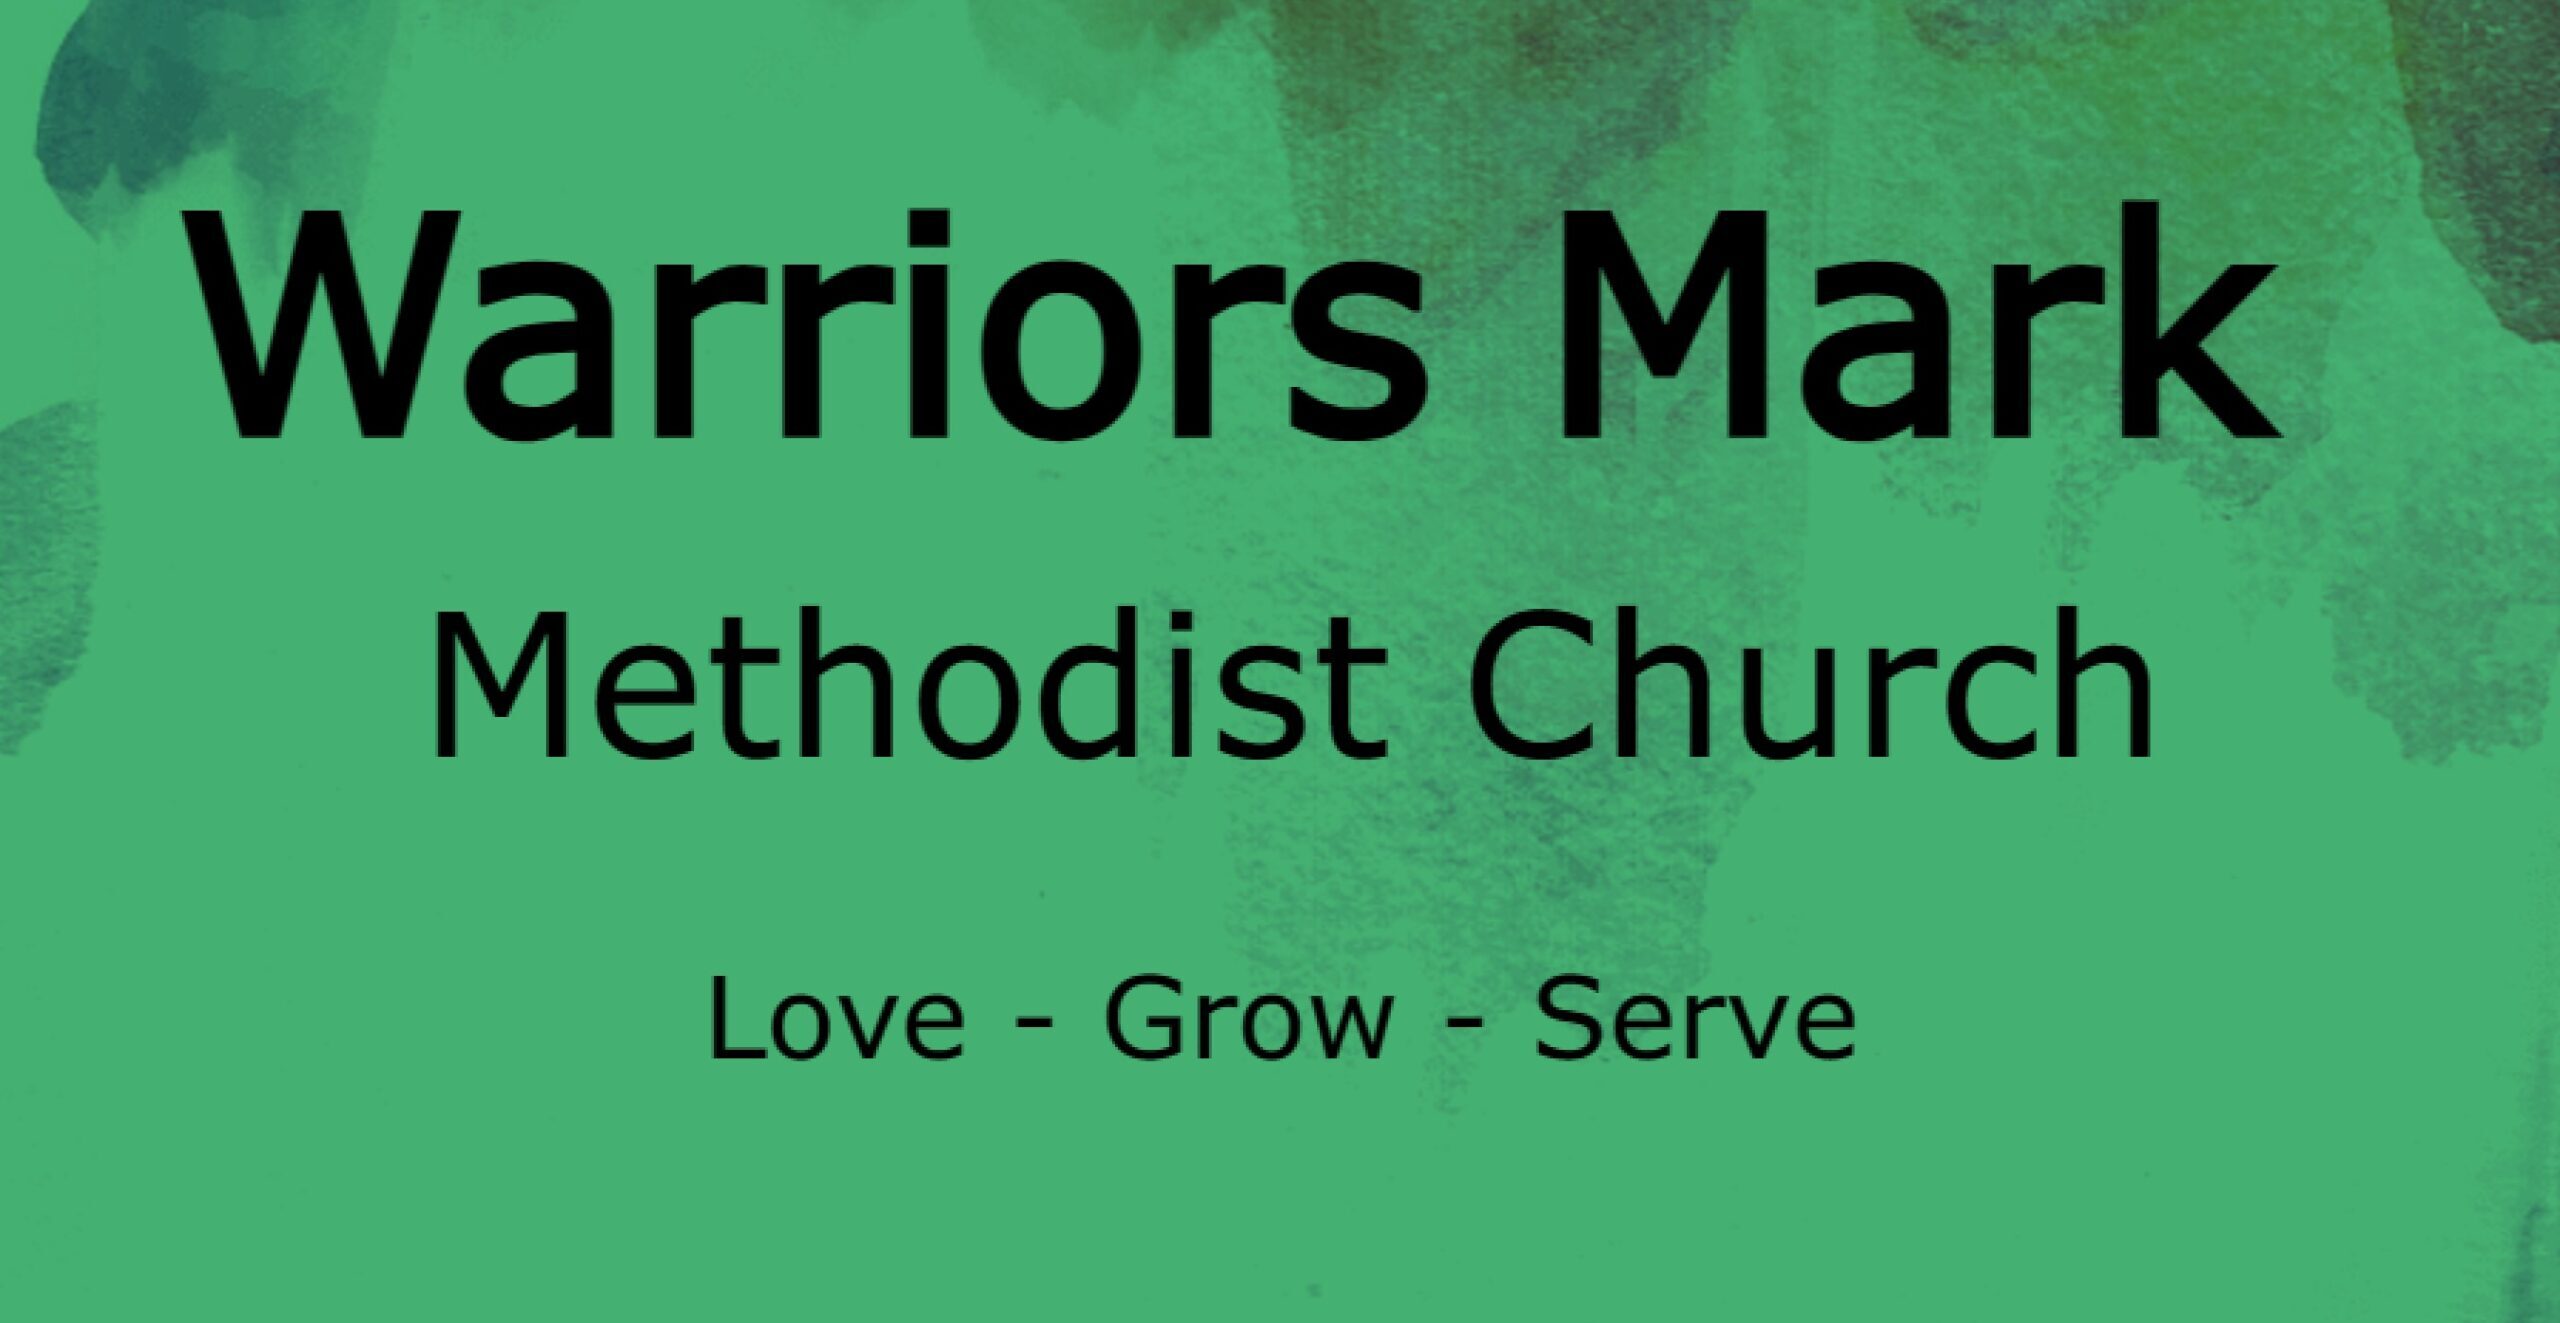 Warriors Mark Methodist Church